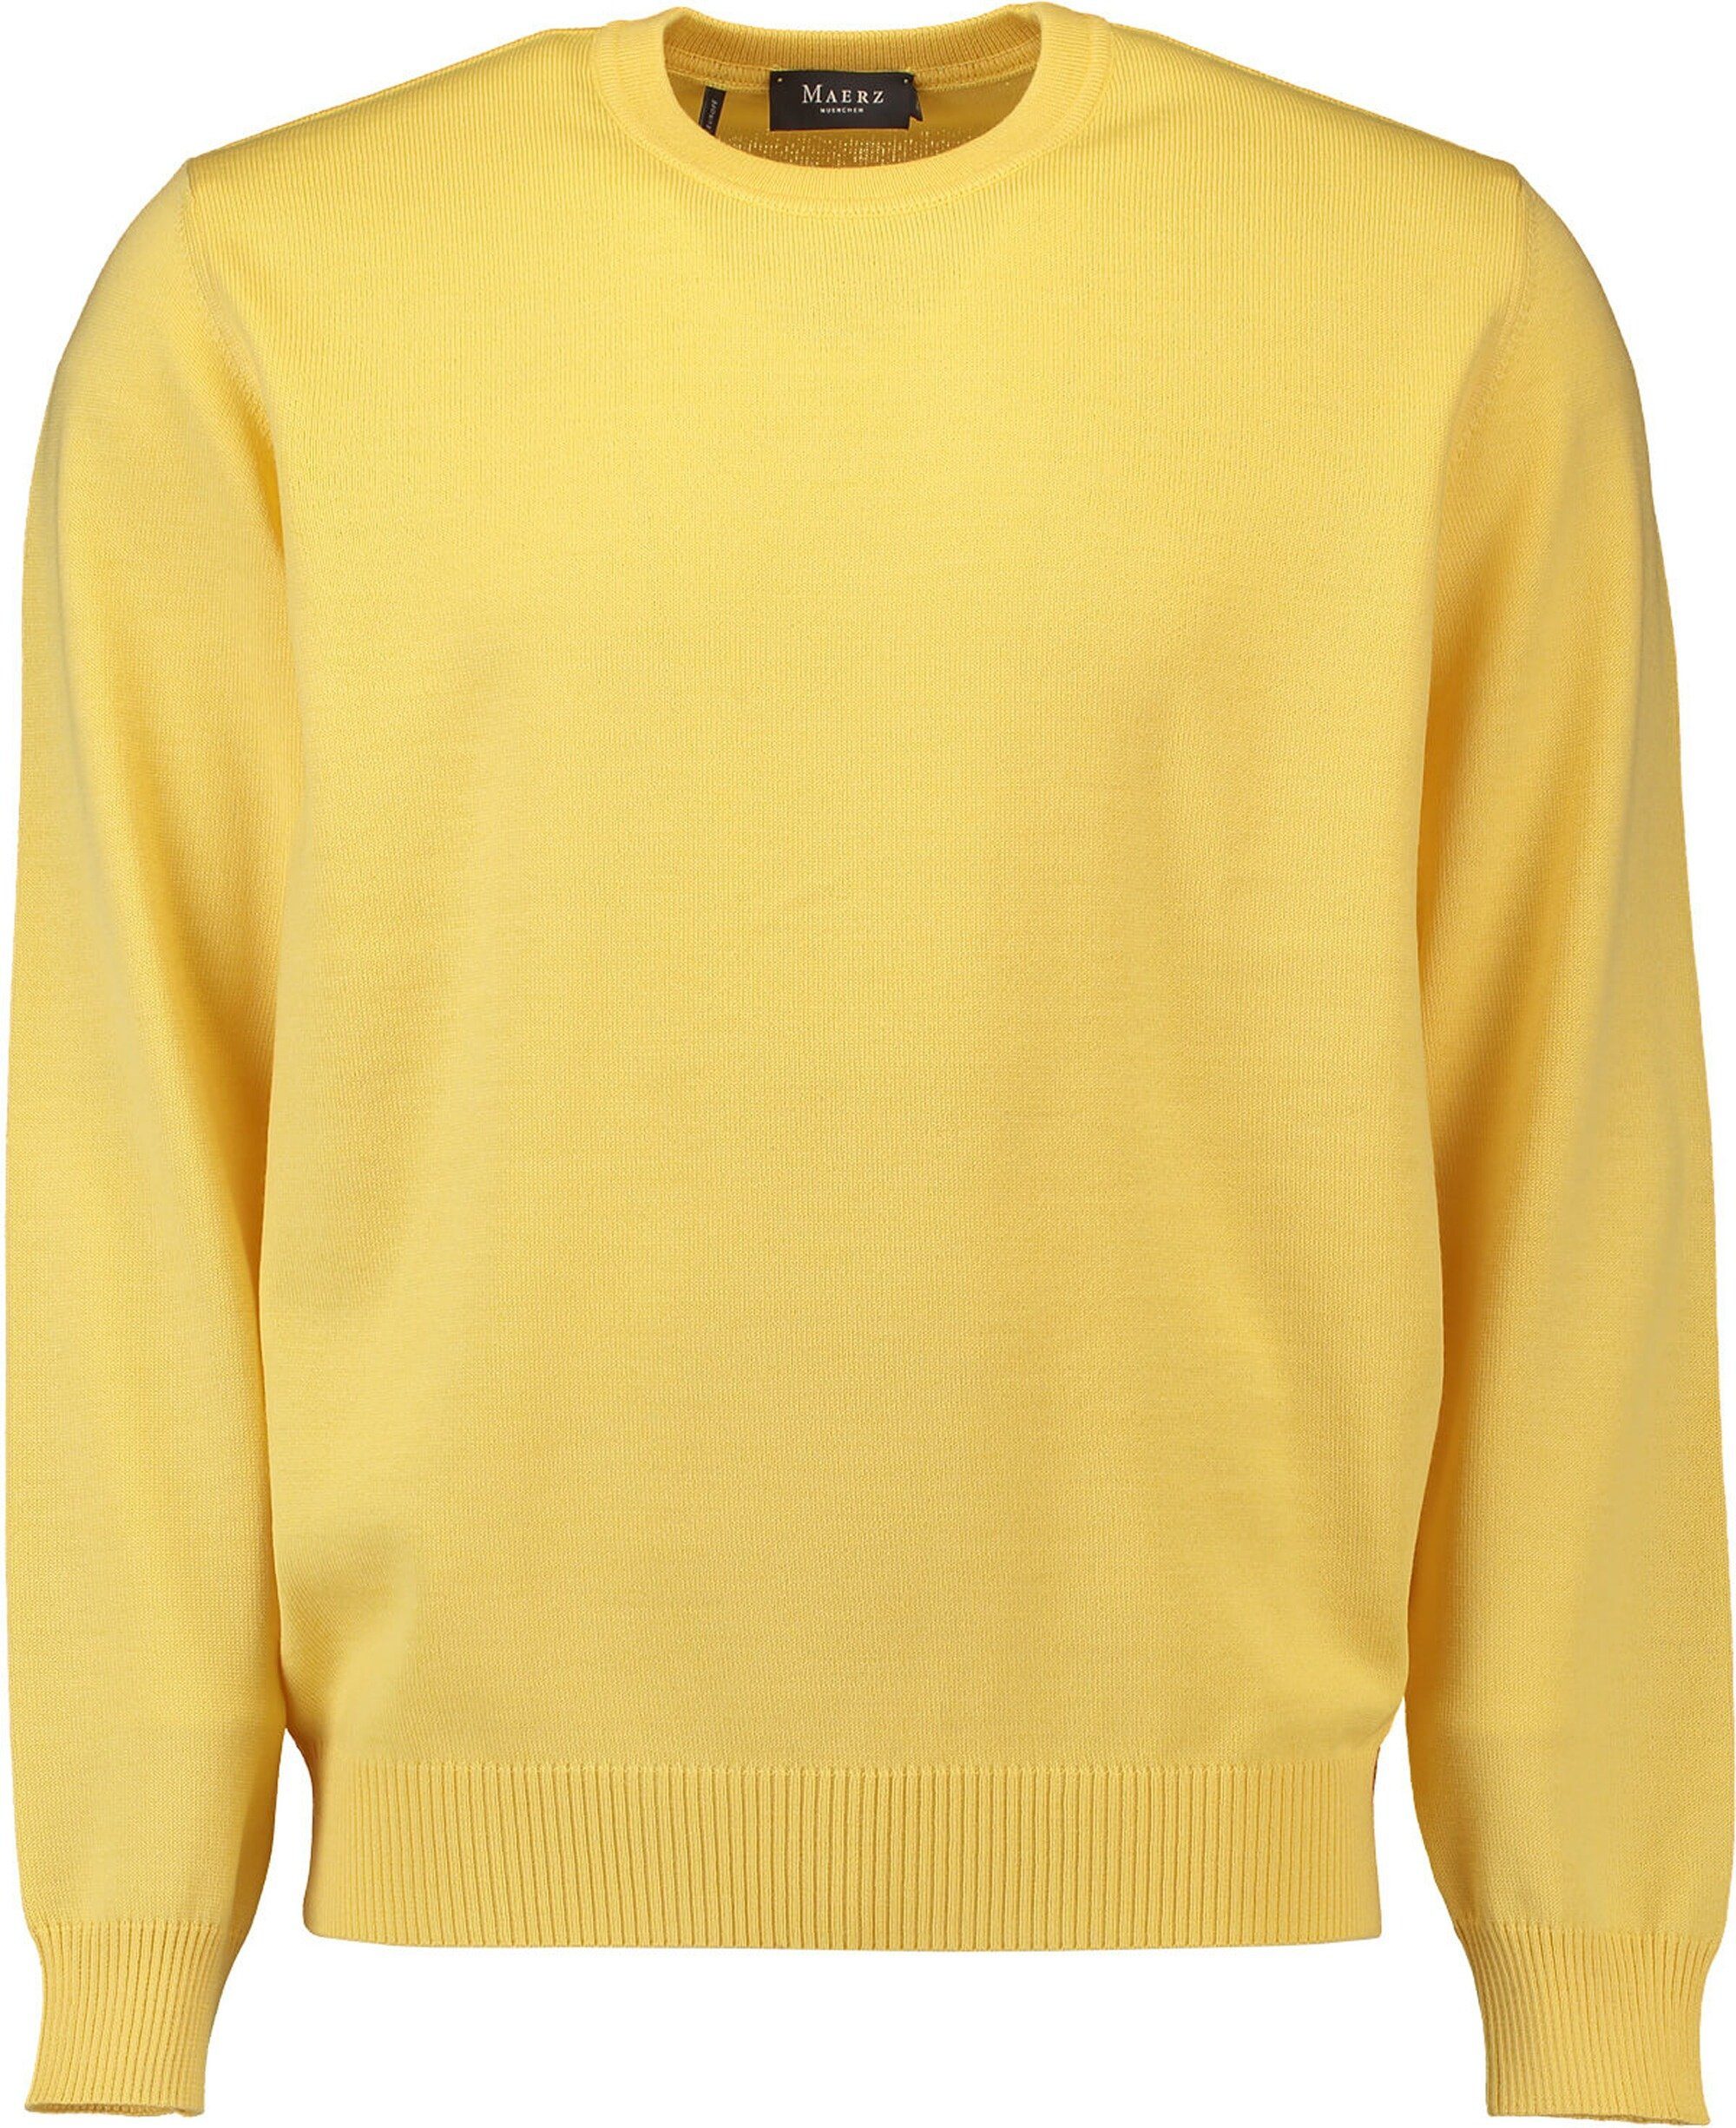 MAERZ Muenchen V-Ausschnitt-Pullover MAERZ V-Ausschnitt Pullover gelb aus  Merinowolle